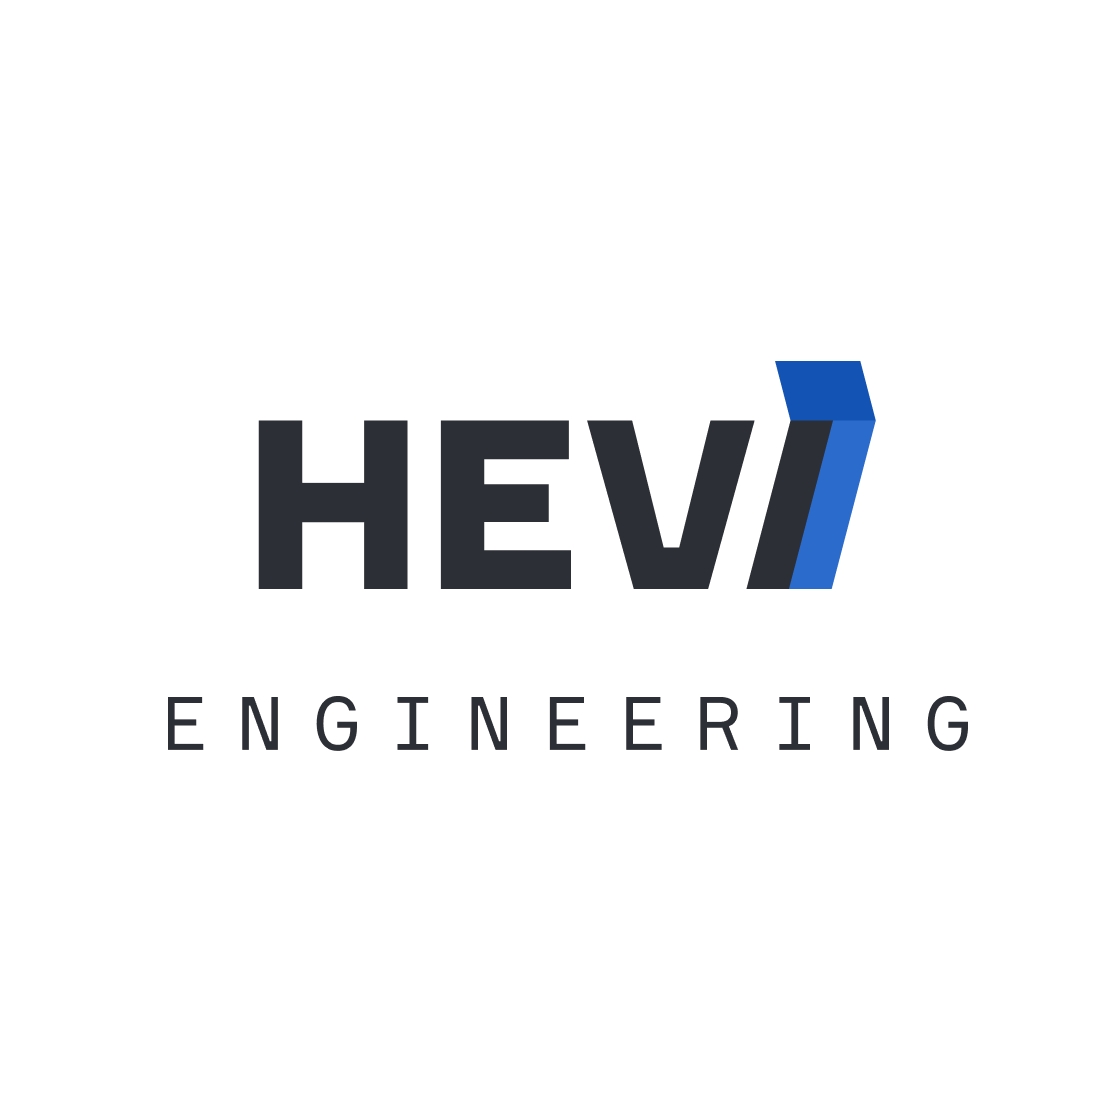 16131980_hevi-engineering-ou_24725659_a_xl.jpg